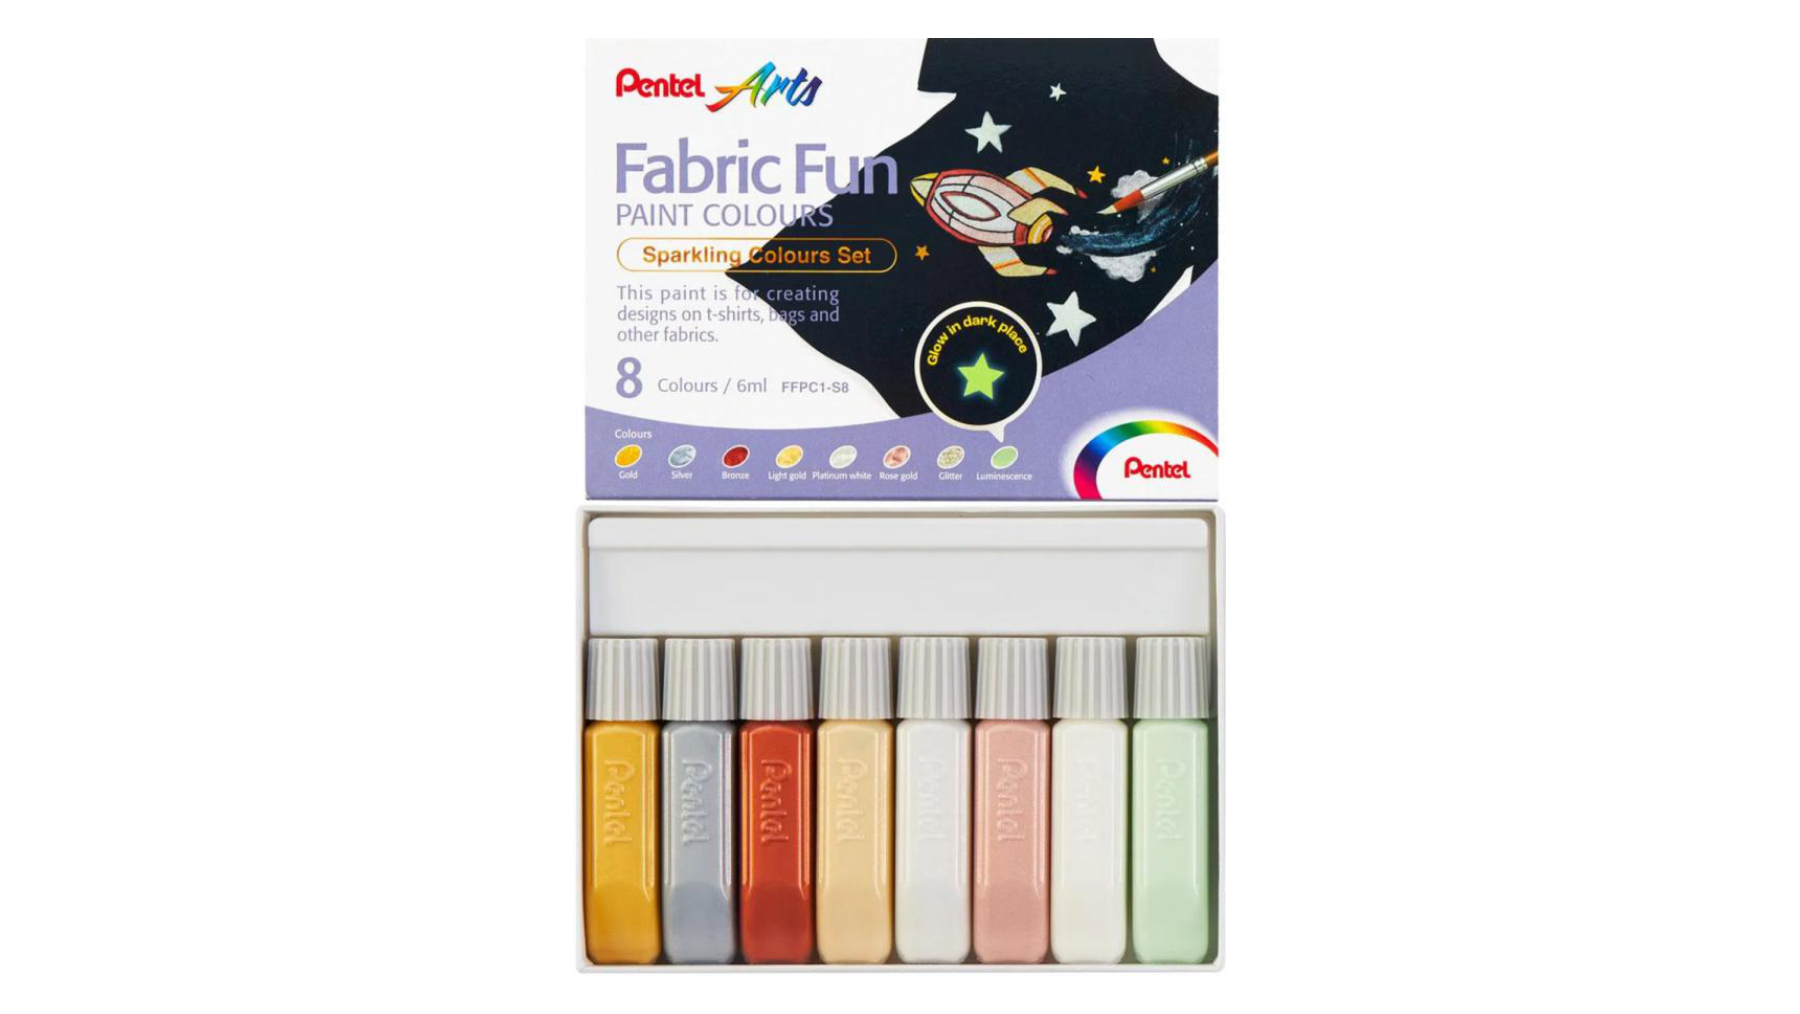 Fabric Fun Paint Colours Sparkling